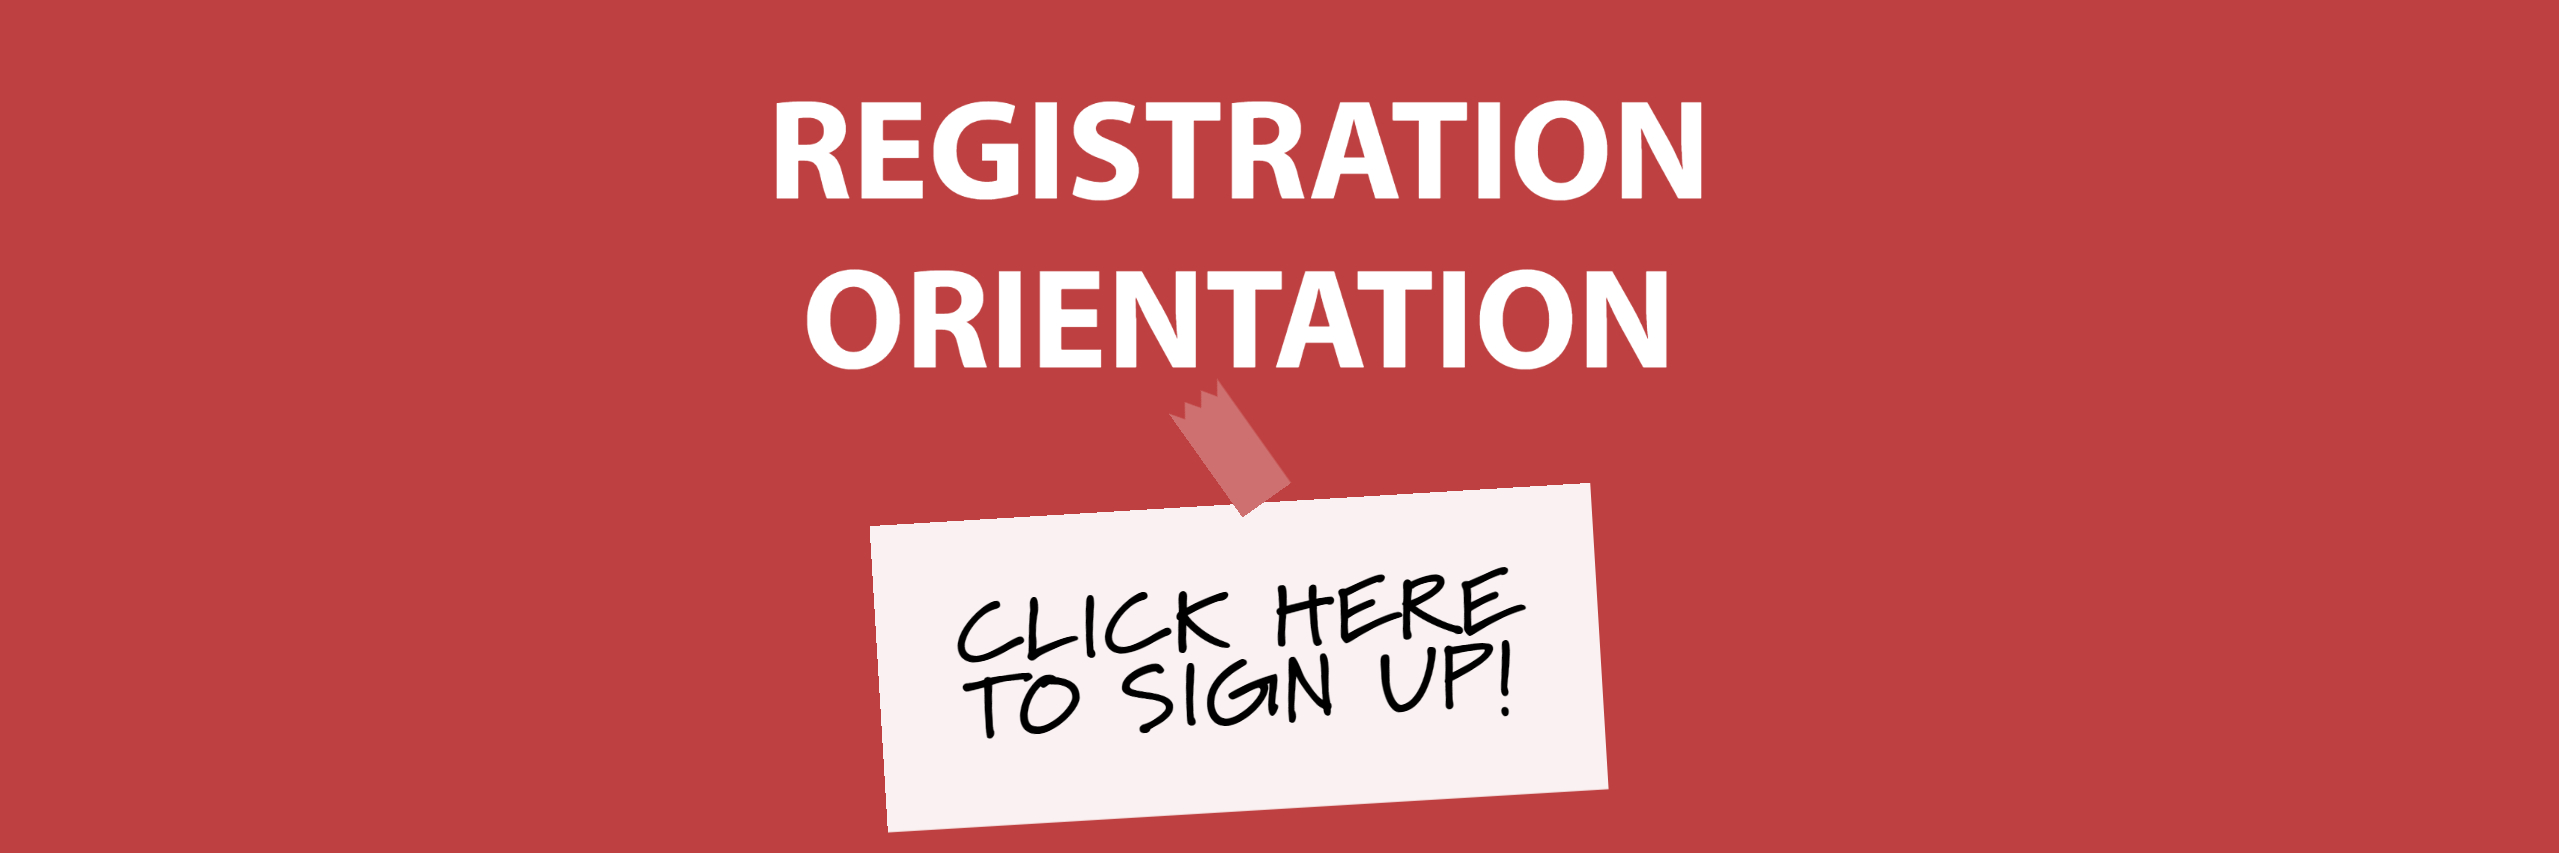 Registration Orientation Link .jpg